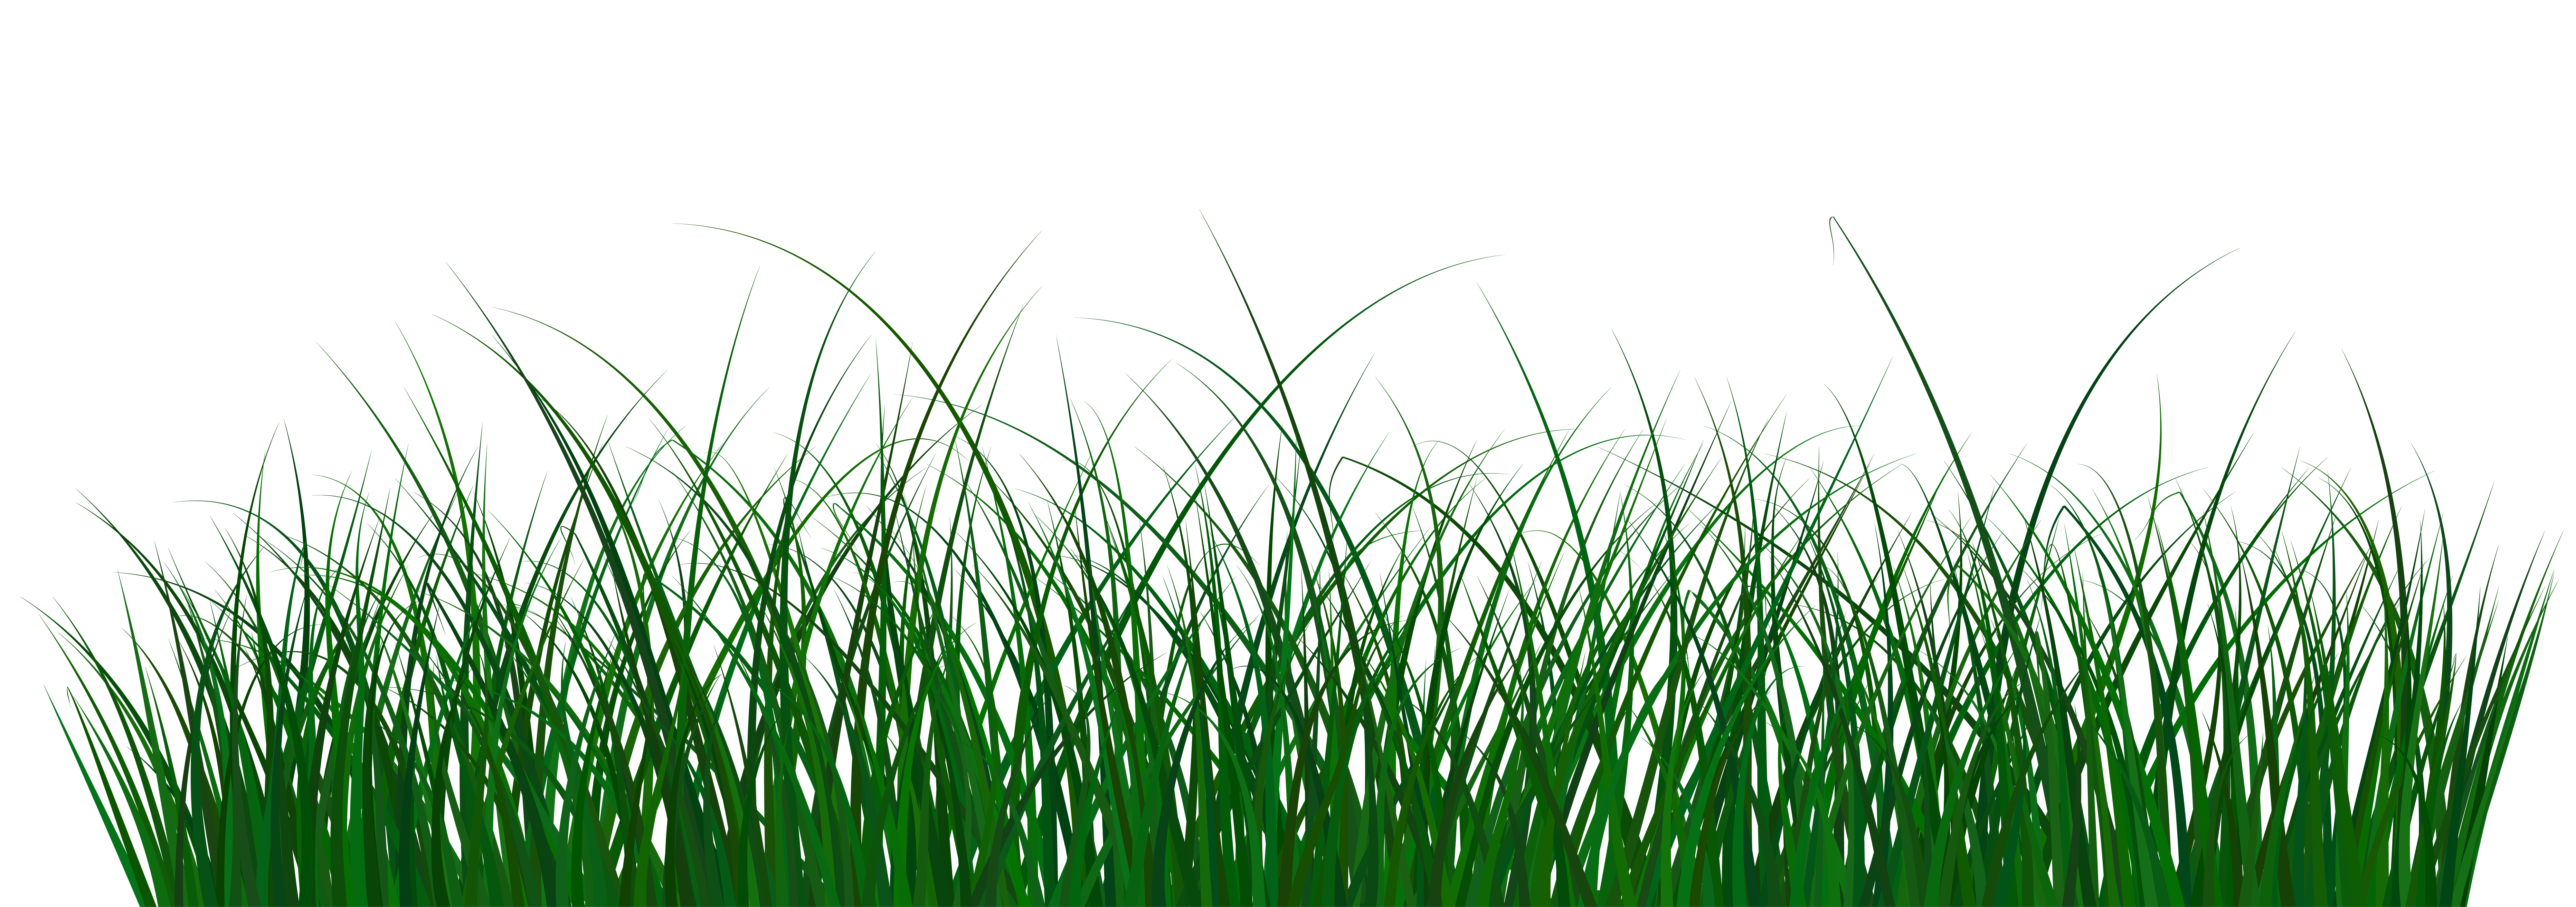 grass-clip-art-free-printable